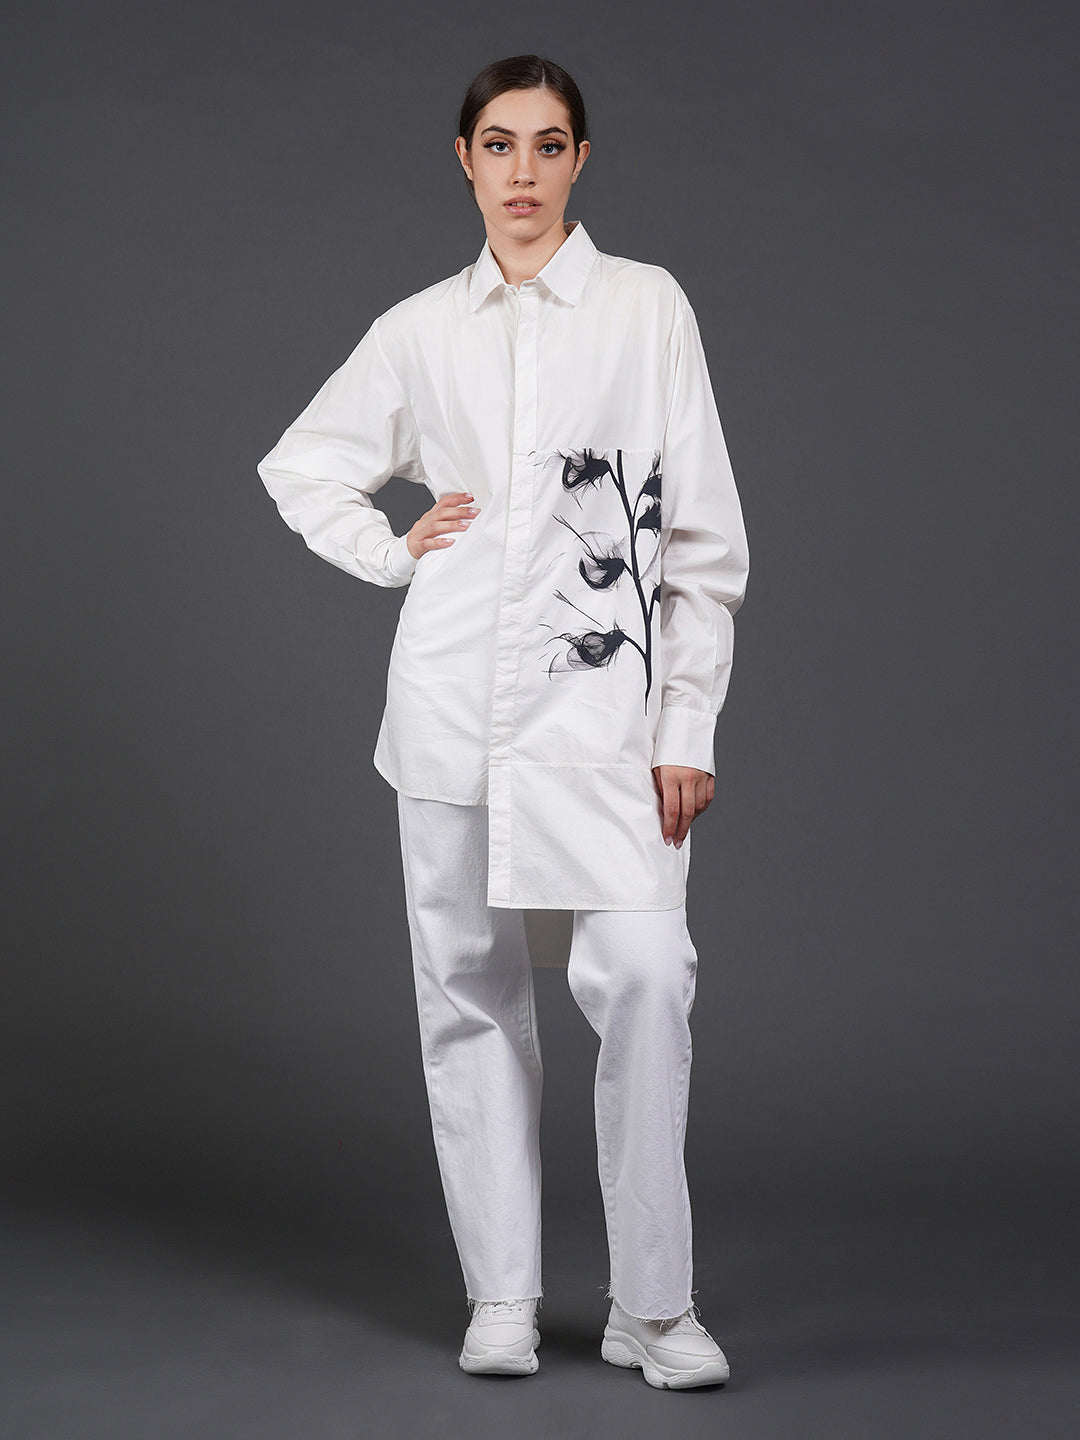 White asymmetric hem, stylish cotton shirt with digital print on it